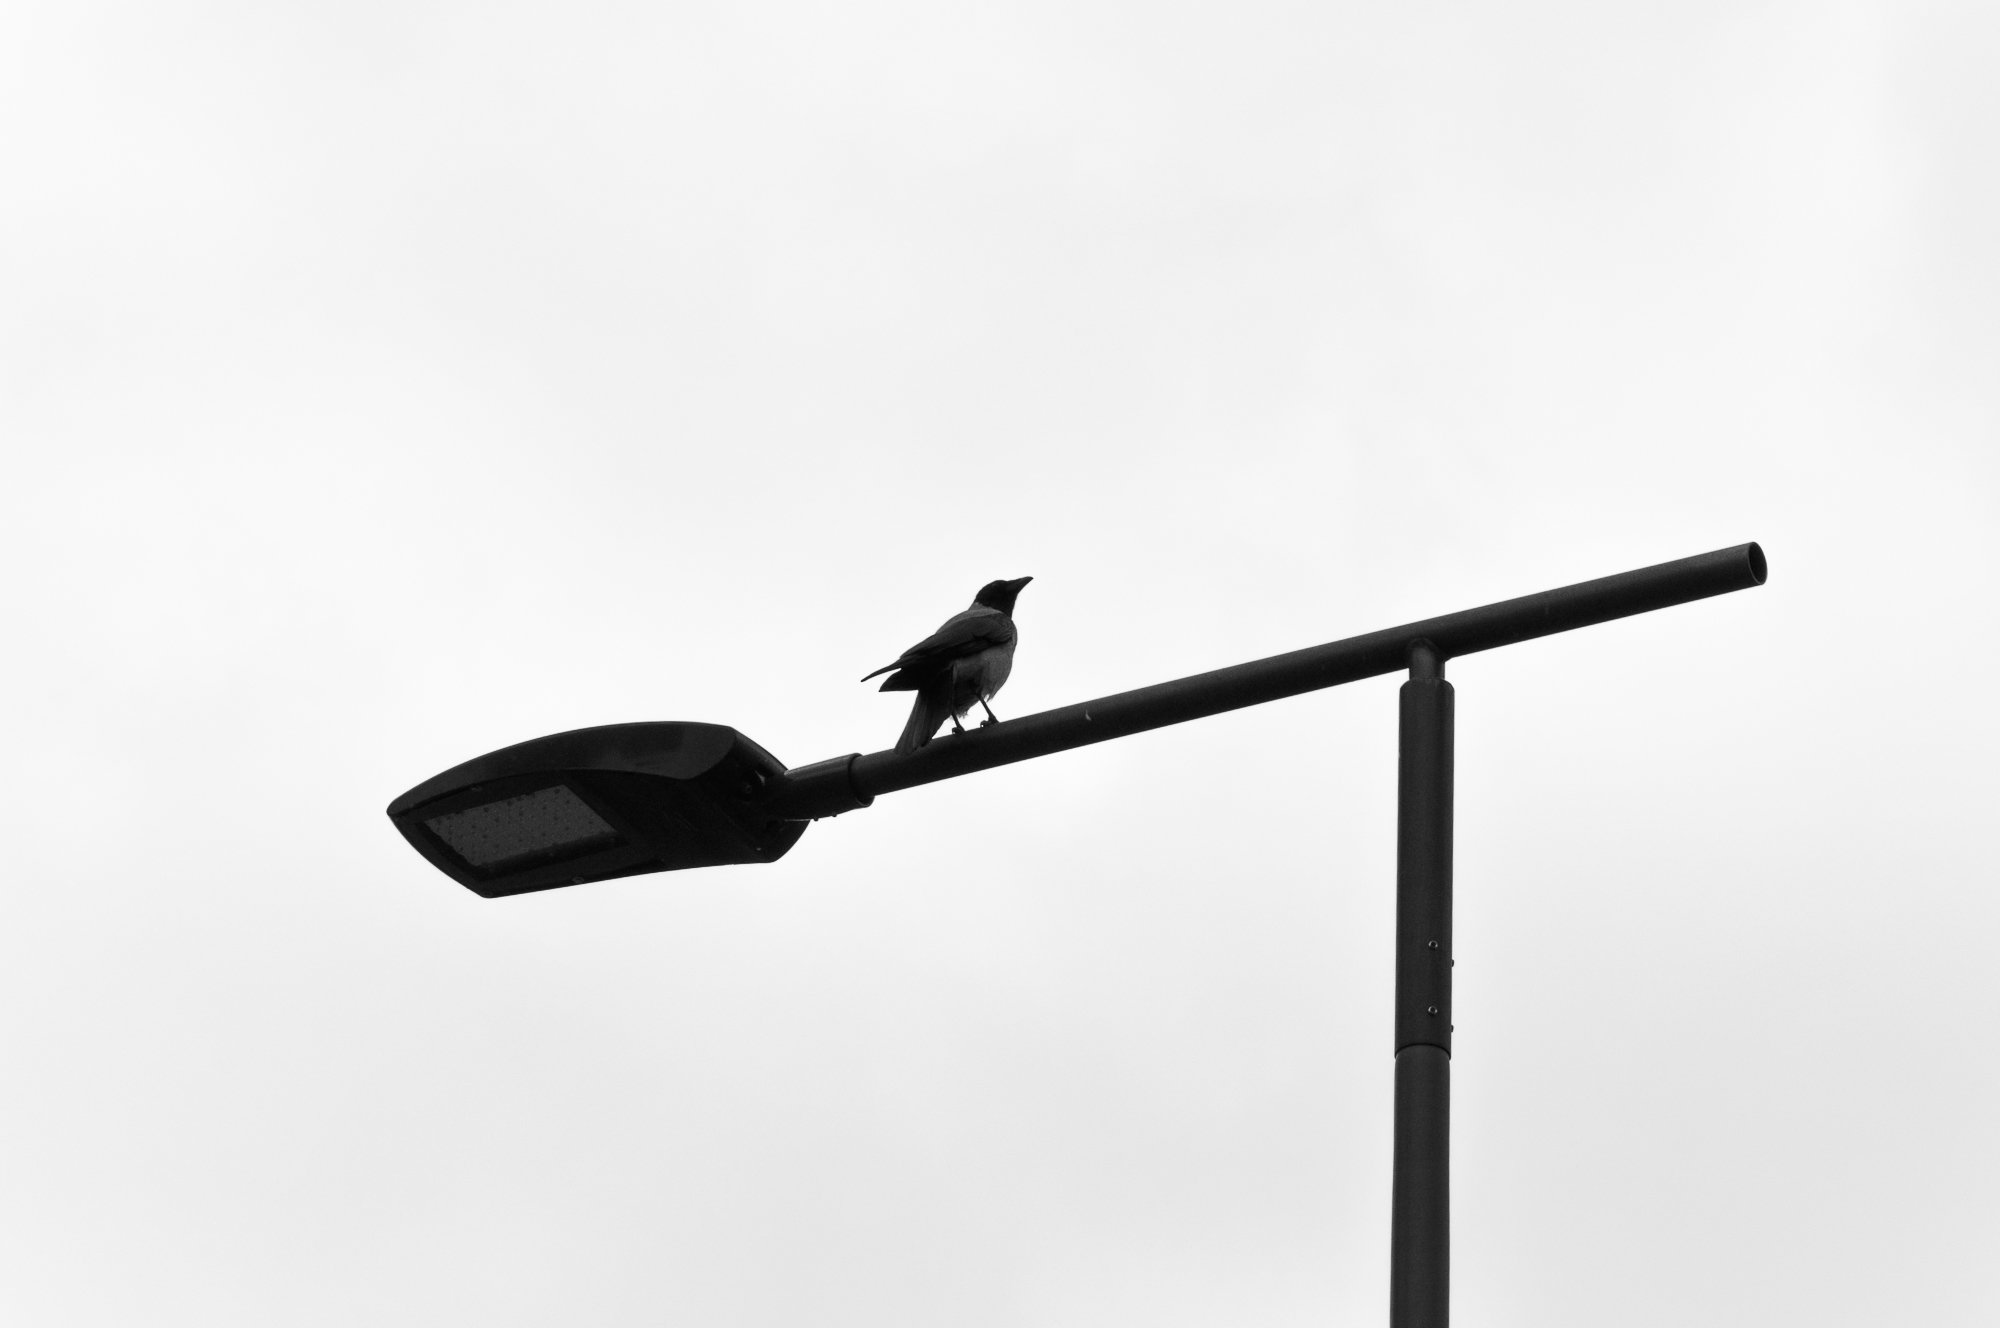 Adam Mazek Photography Warsaw 2020. Post: "Walking style." Minimalism. Bird on the street lamp.